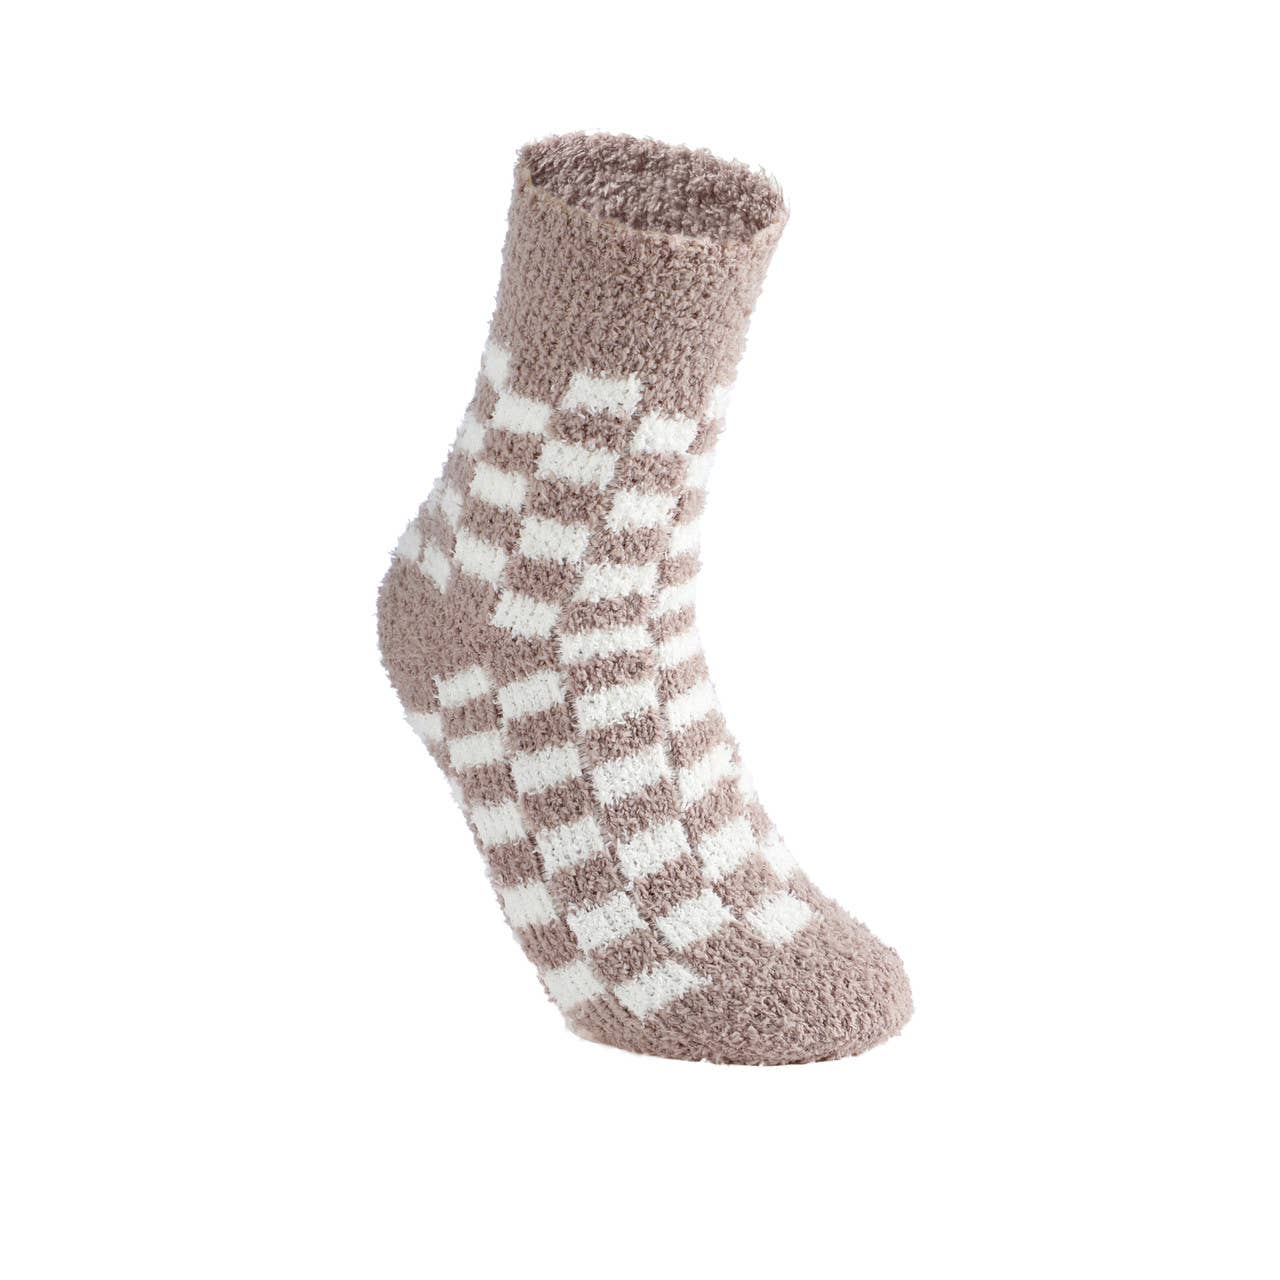 Ladies Fuzzy Socks - 3 pair Set - Tan my